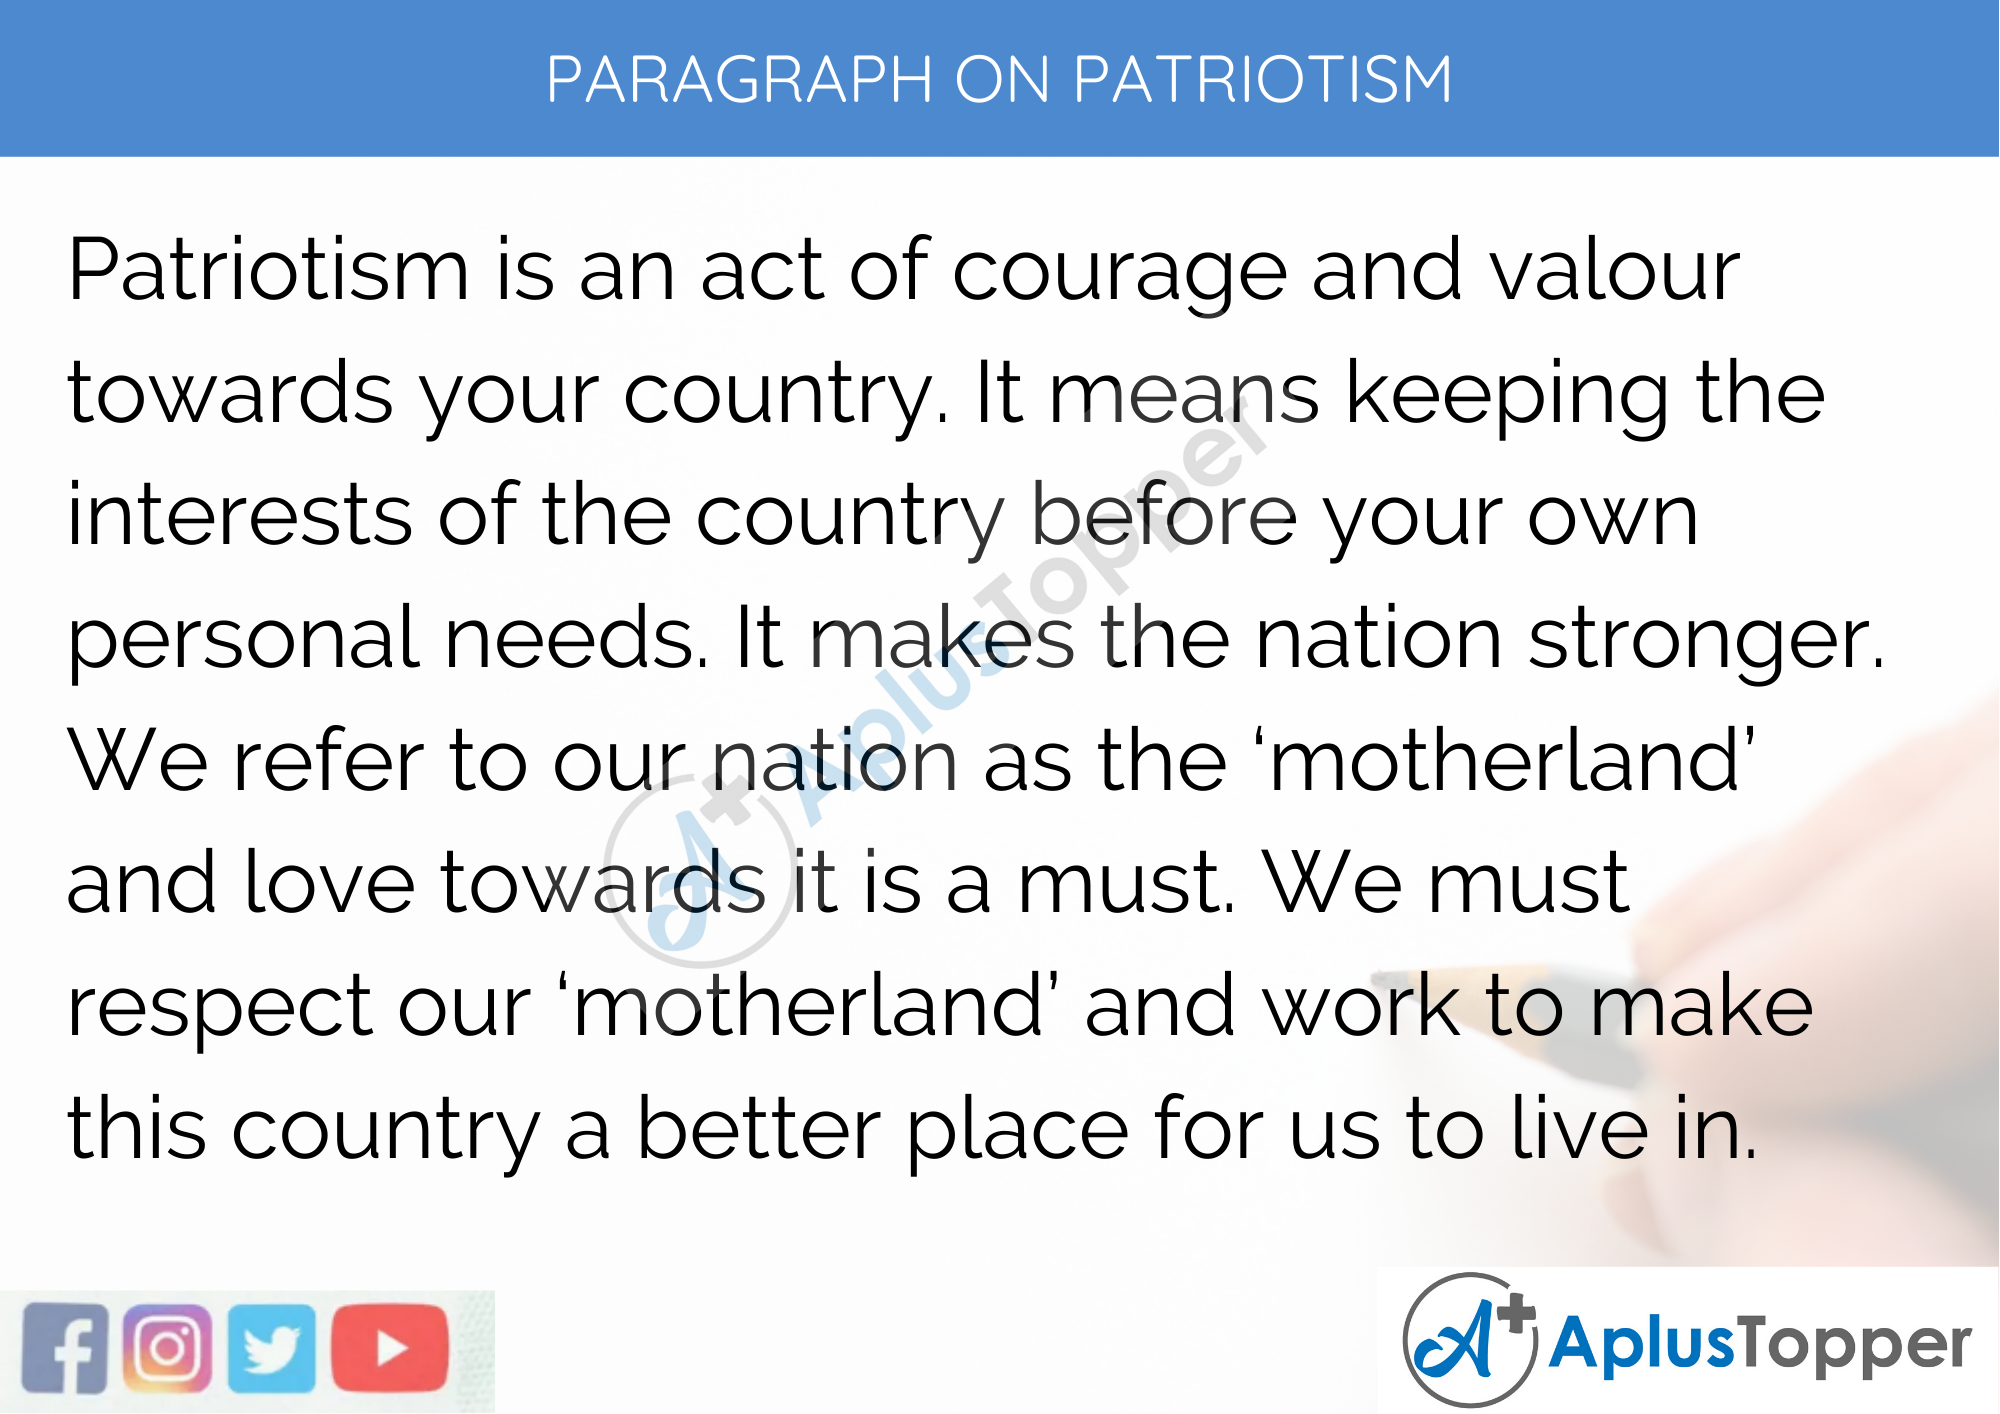 essay on patriotism of india